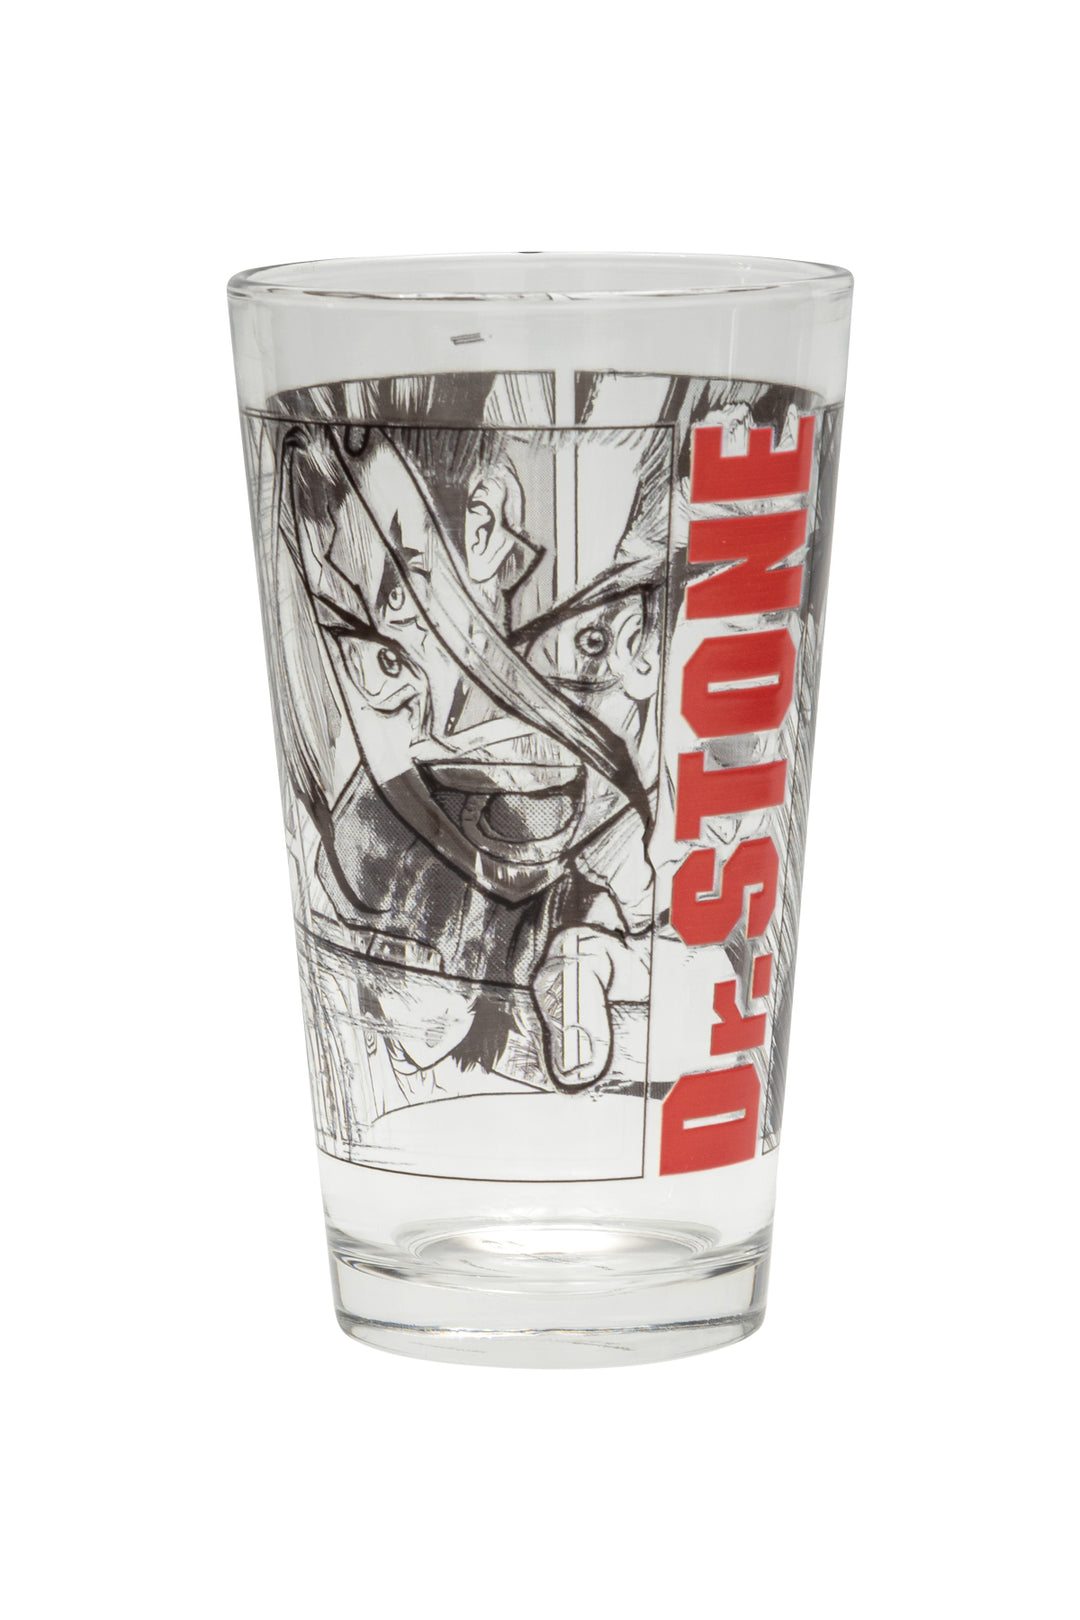 Dr. STONE Manga Panel Pint Glass Set - Set of Two